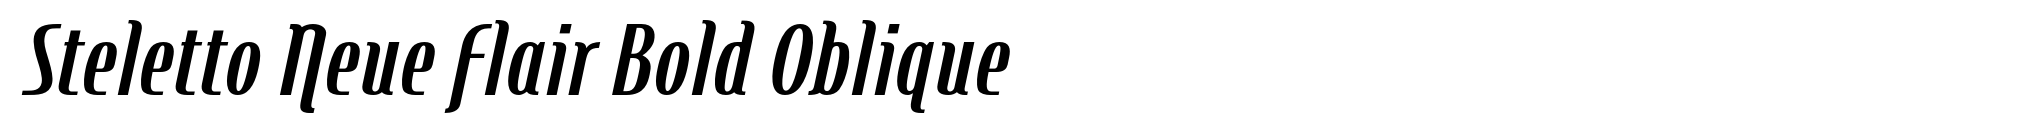 Steletto Neue Flair Bold Oblique image